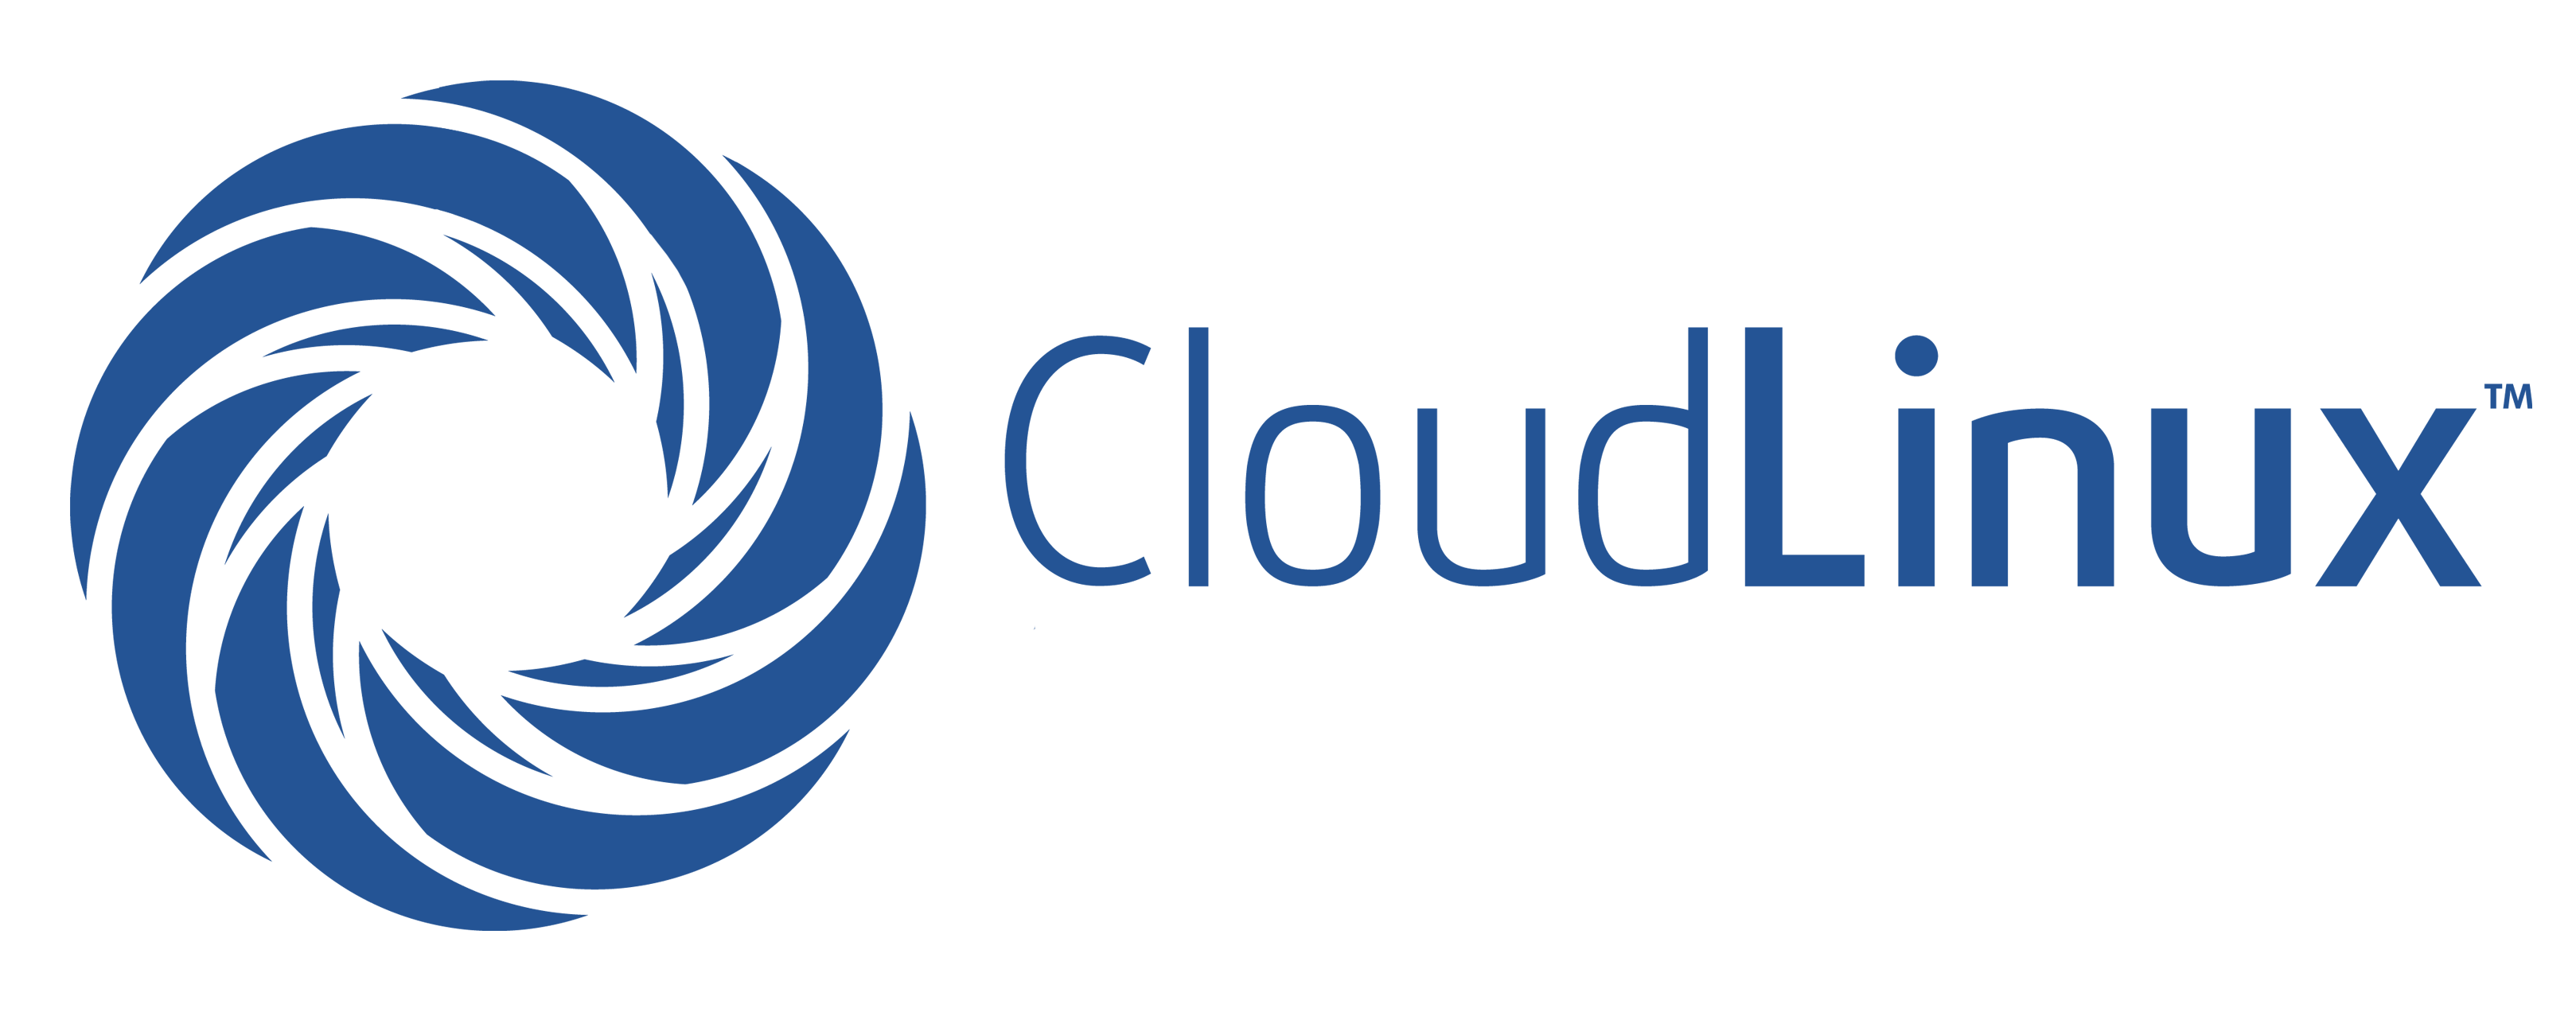 نصب Cloud Linux